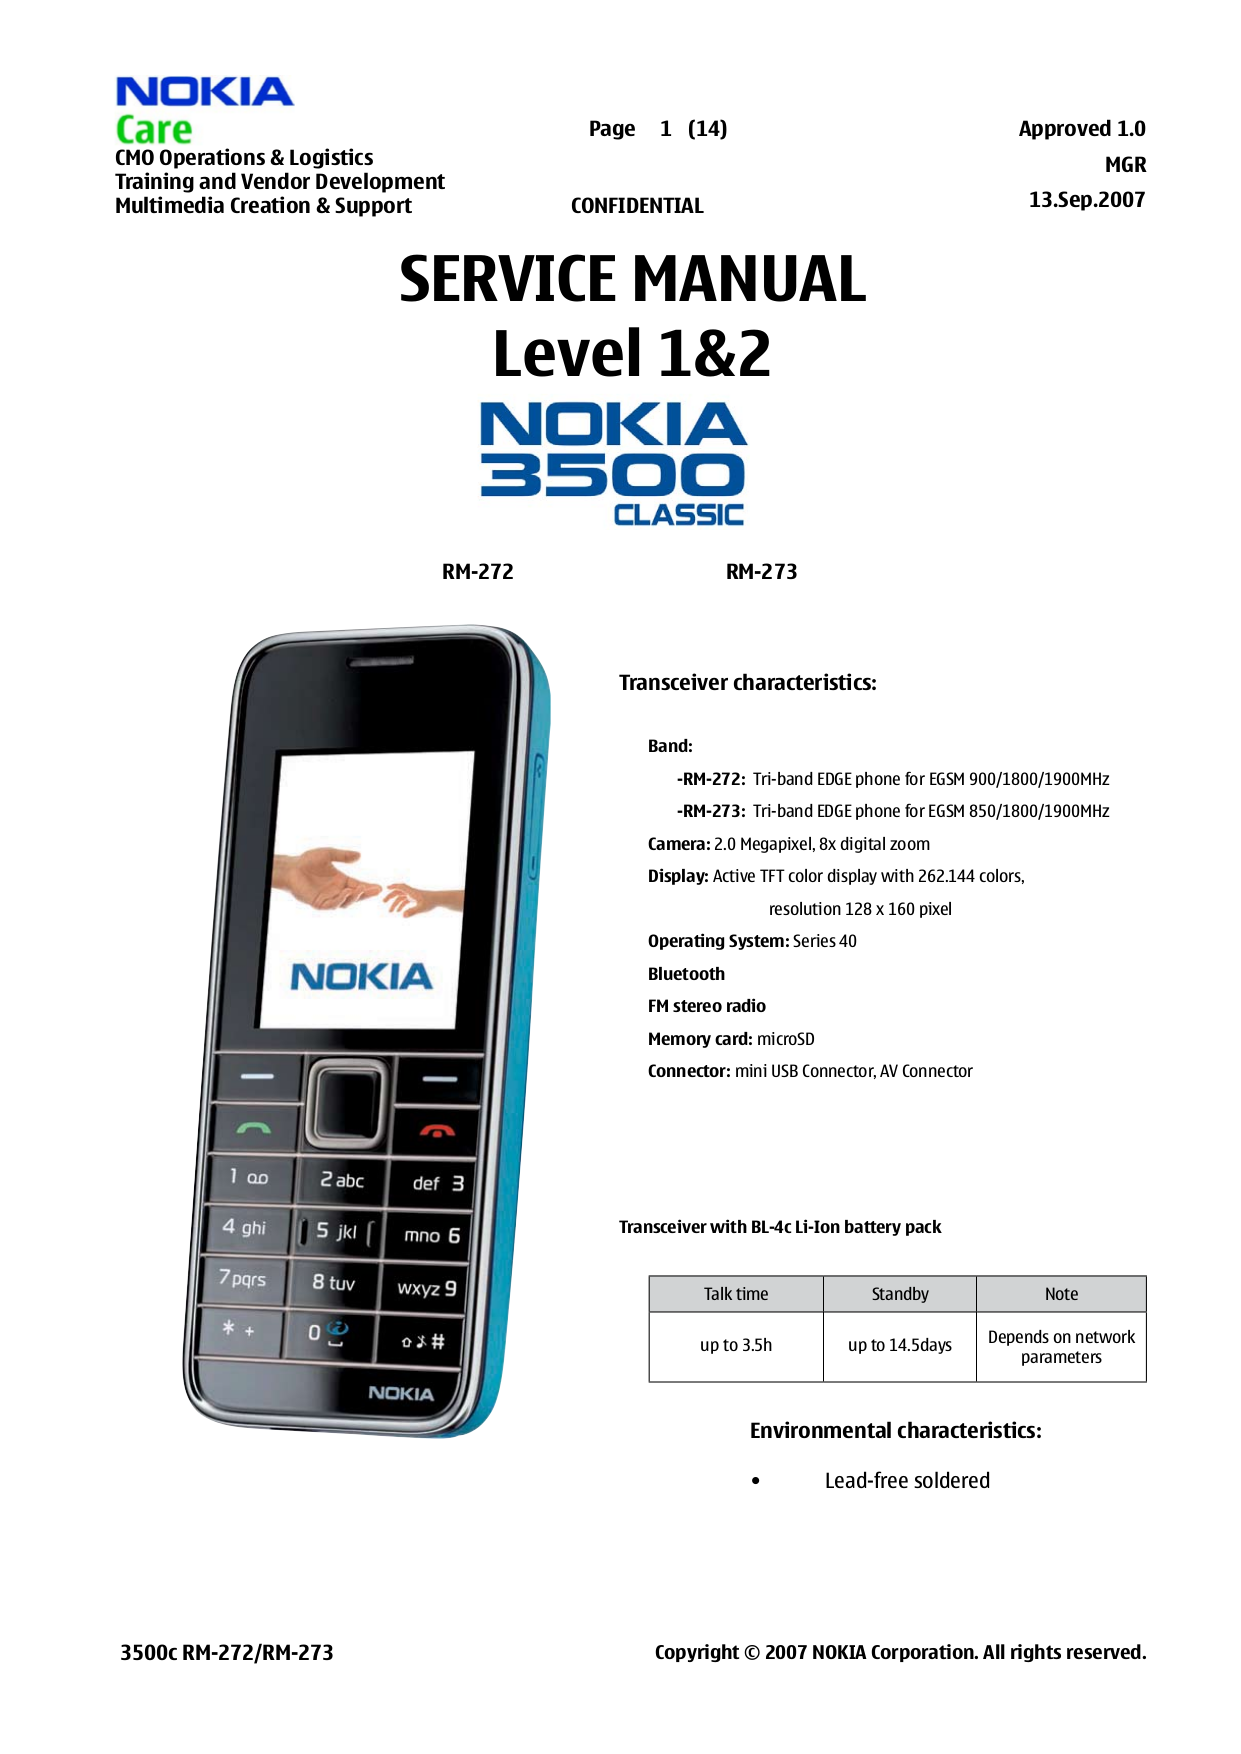 nokia cell phones manual - PDF Free Download - vibdoccom